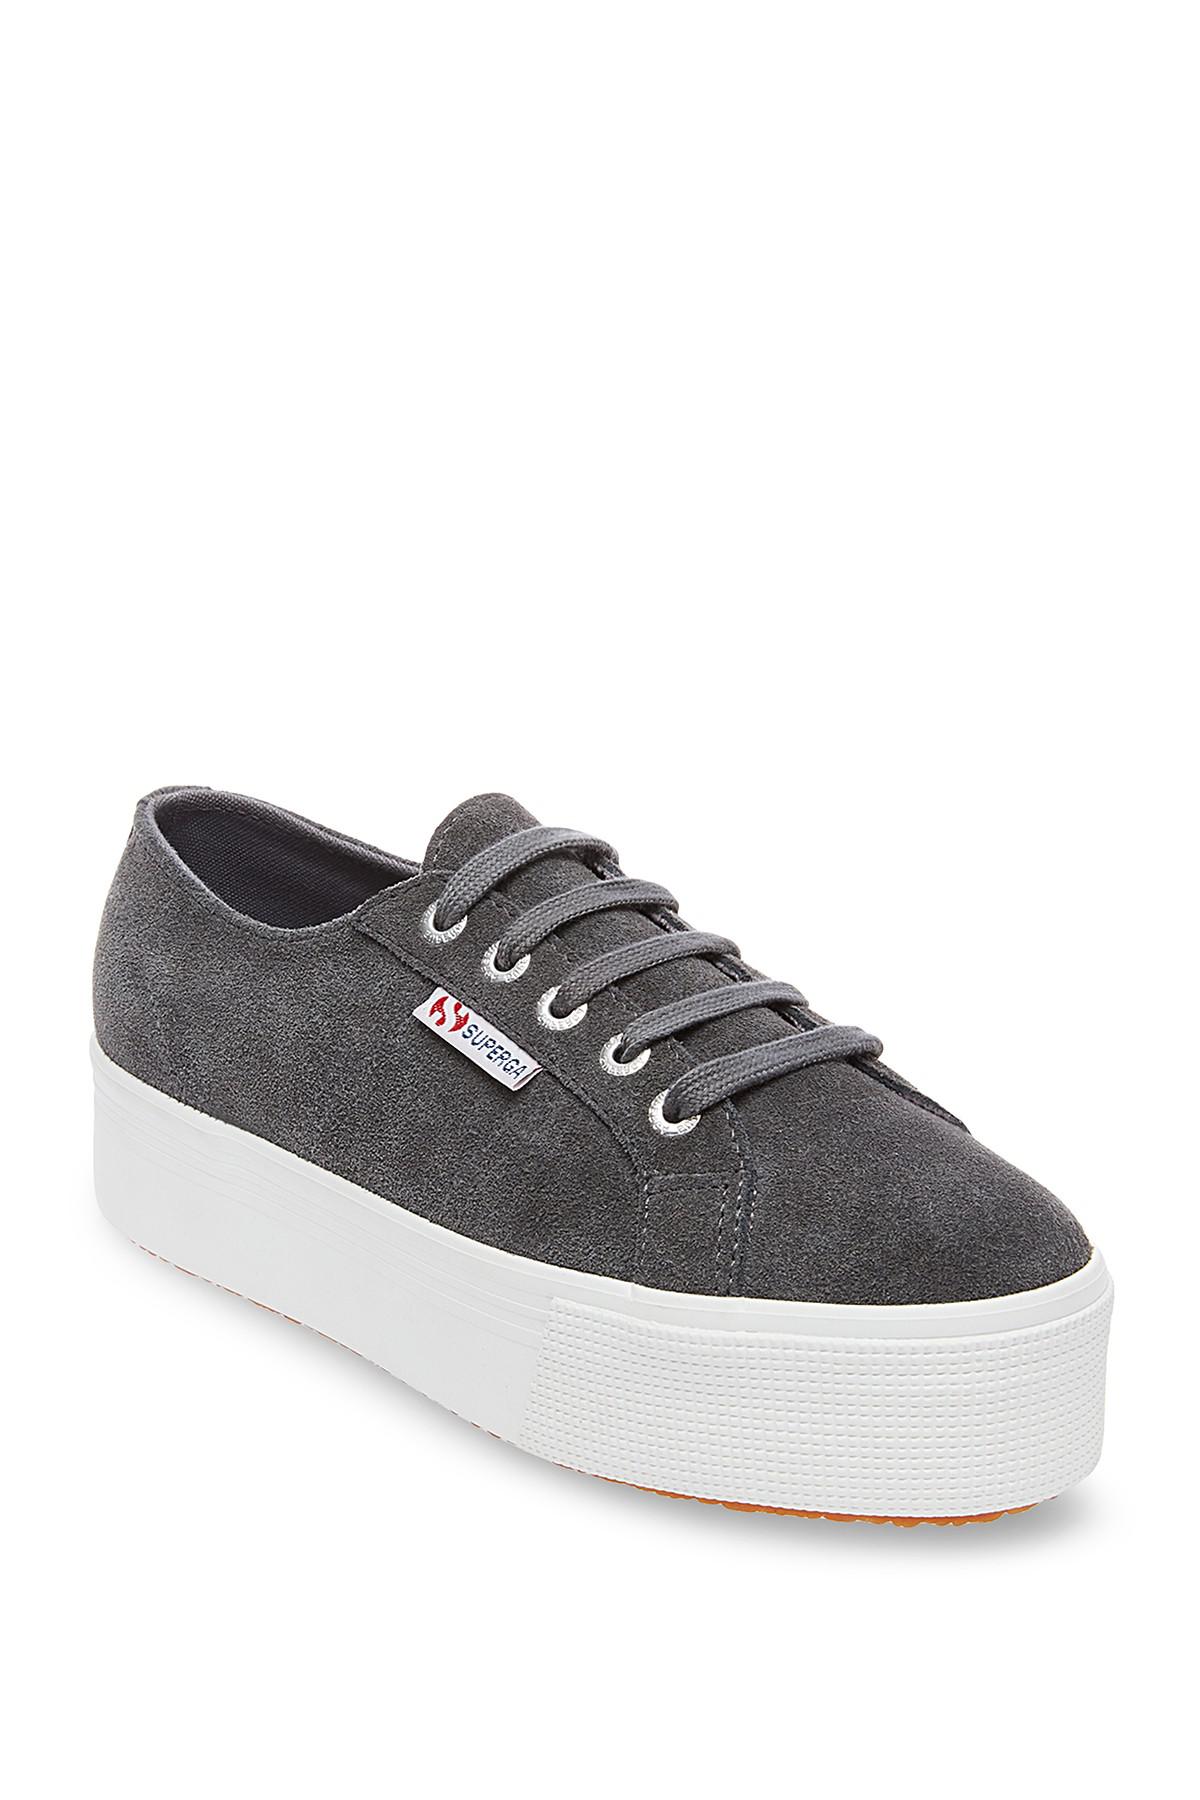 Superga Suede Platform Sneaker in Grey Suede (Gray) - Lyst